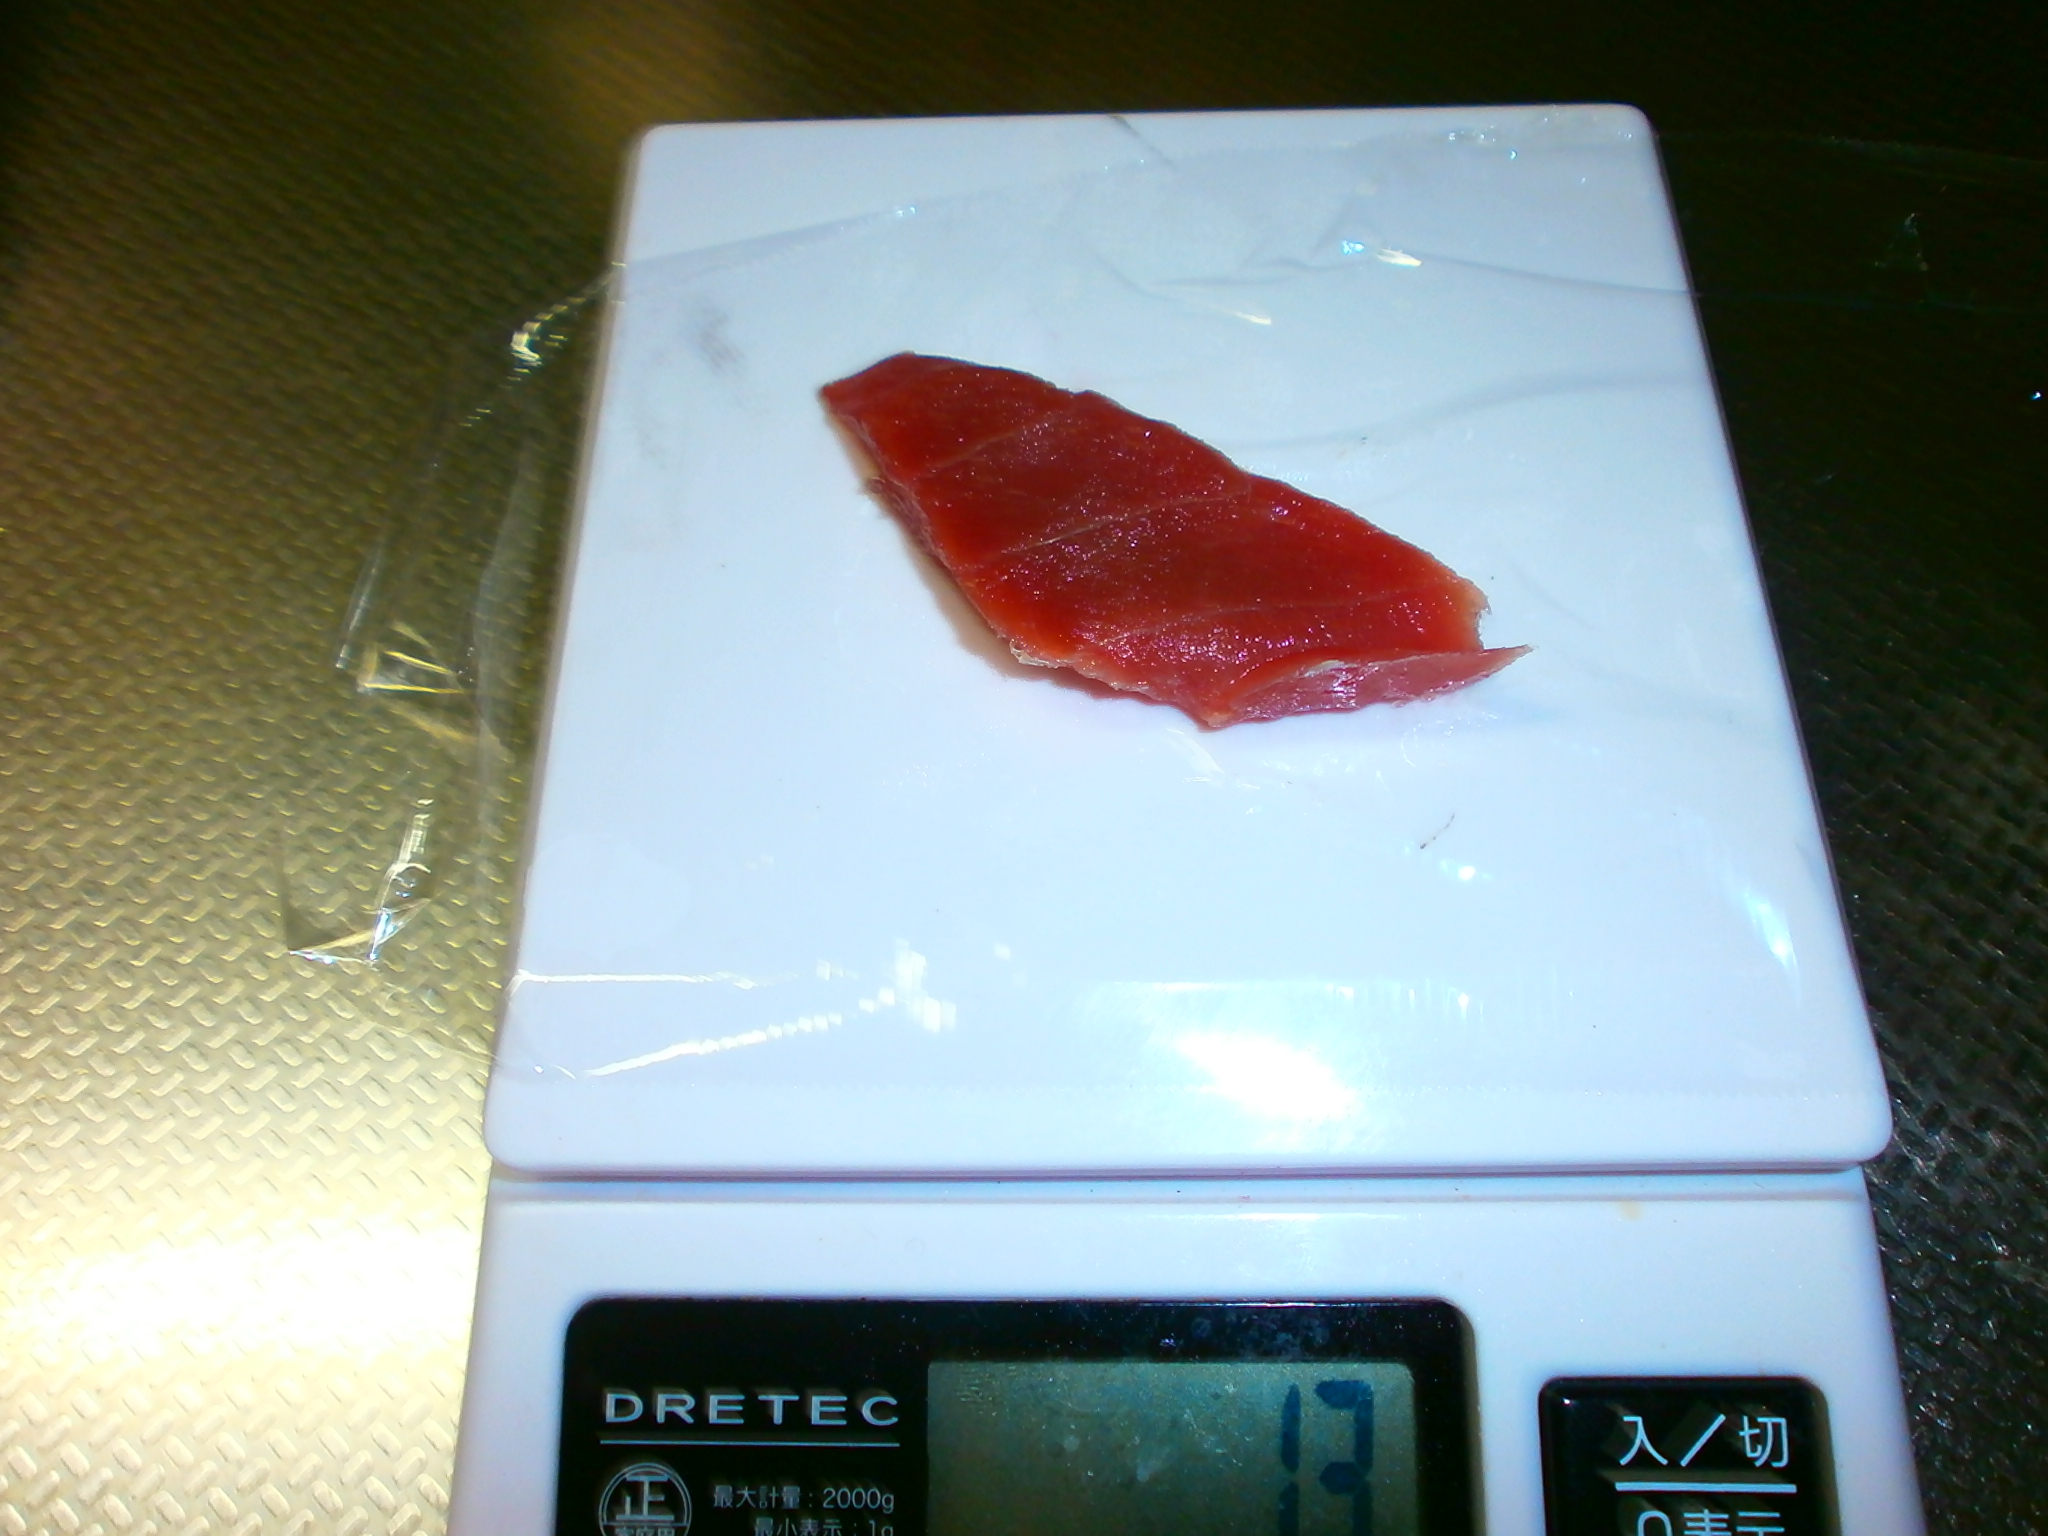 Thunfisch-Sashimi